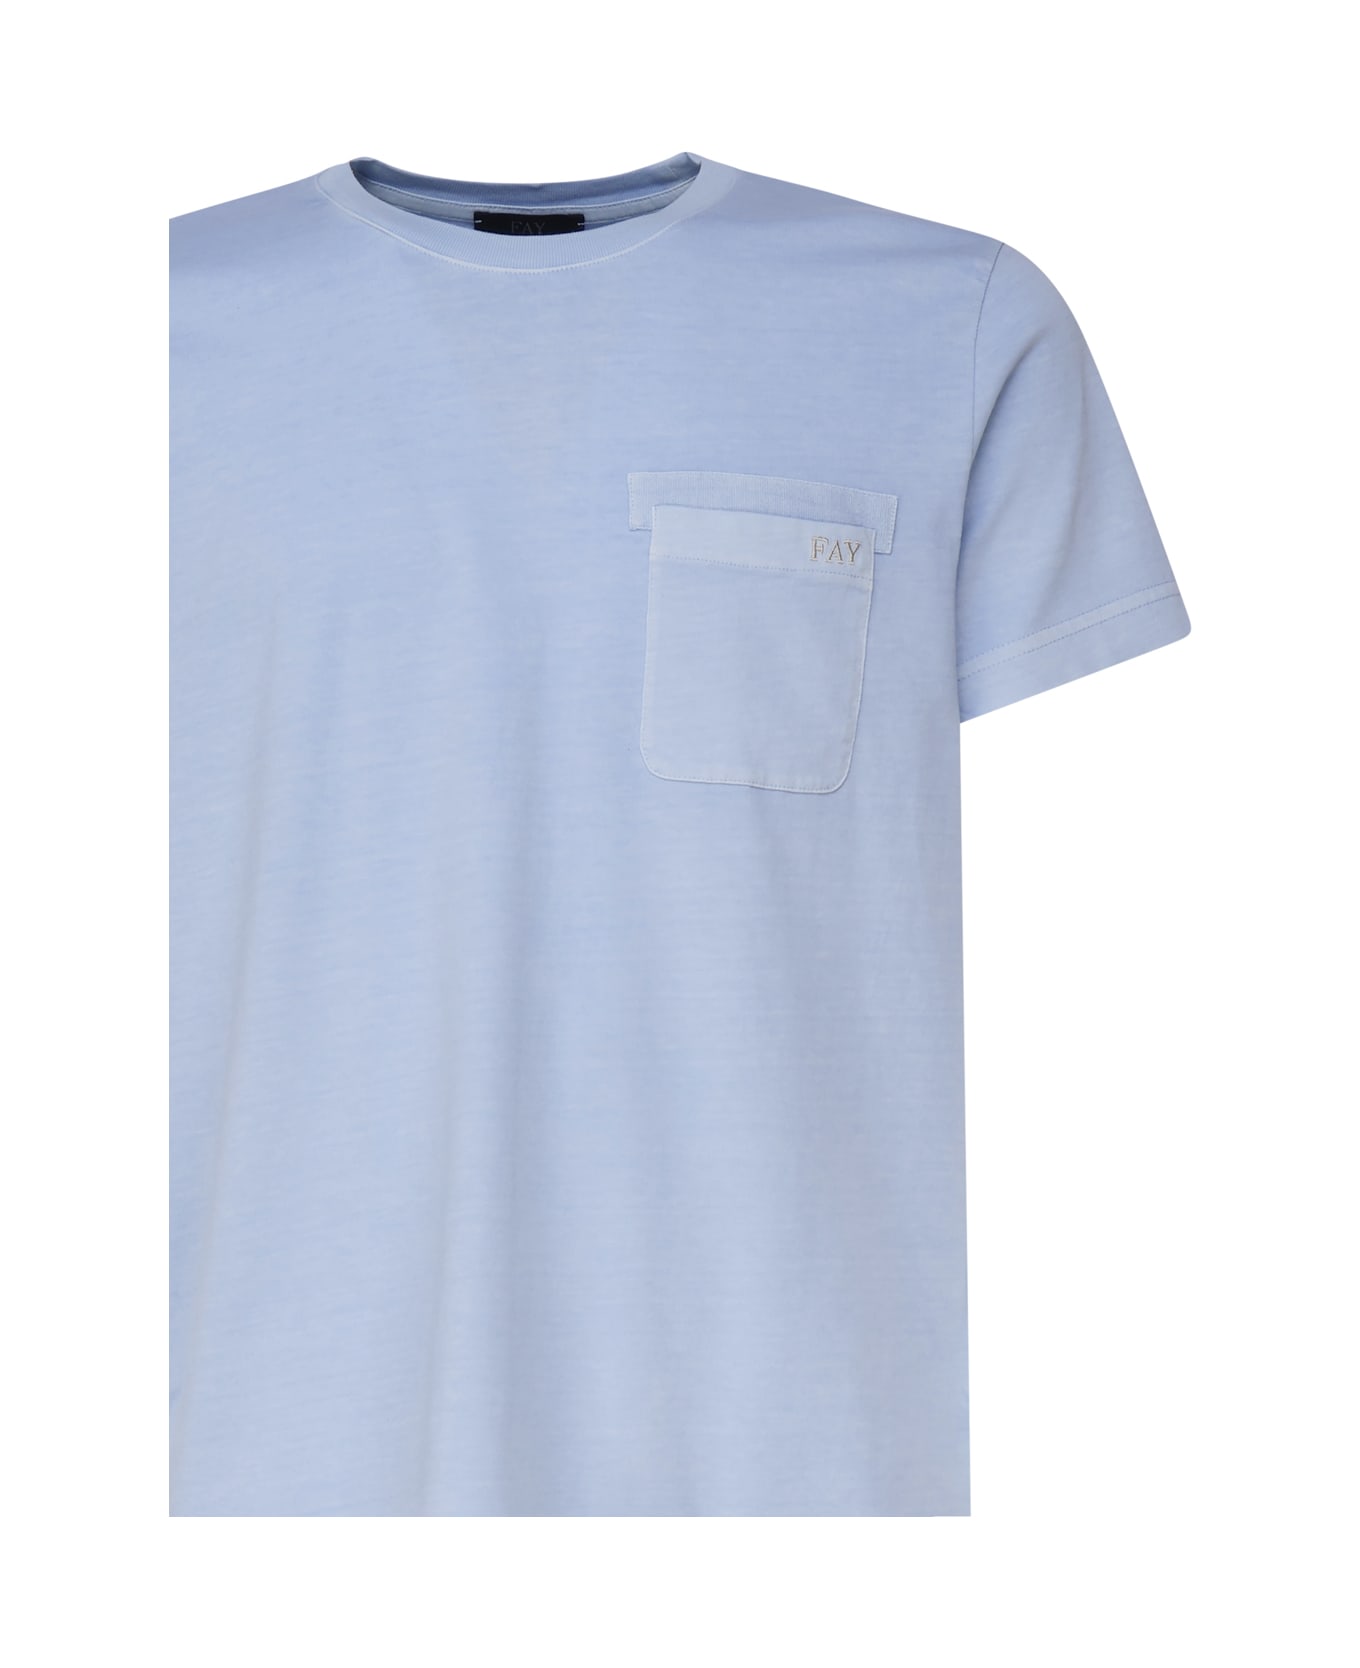 Fay T-shirt With Pocket - Light blue